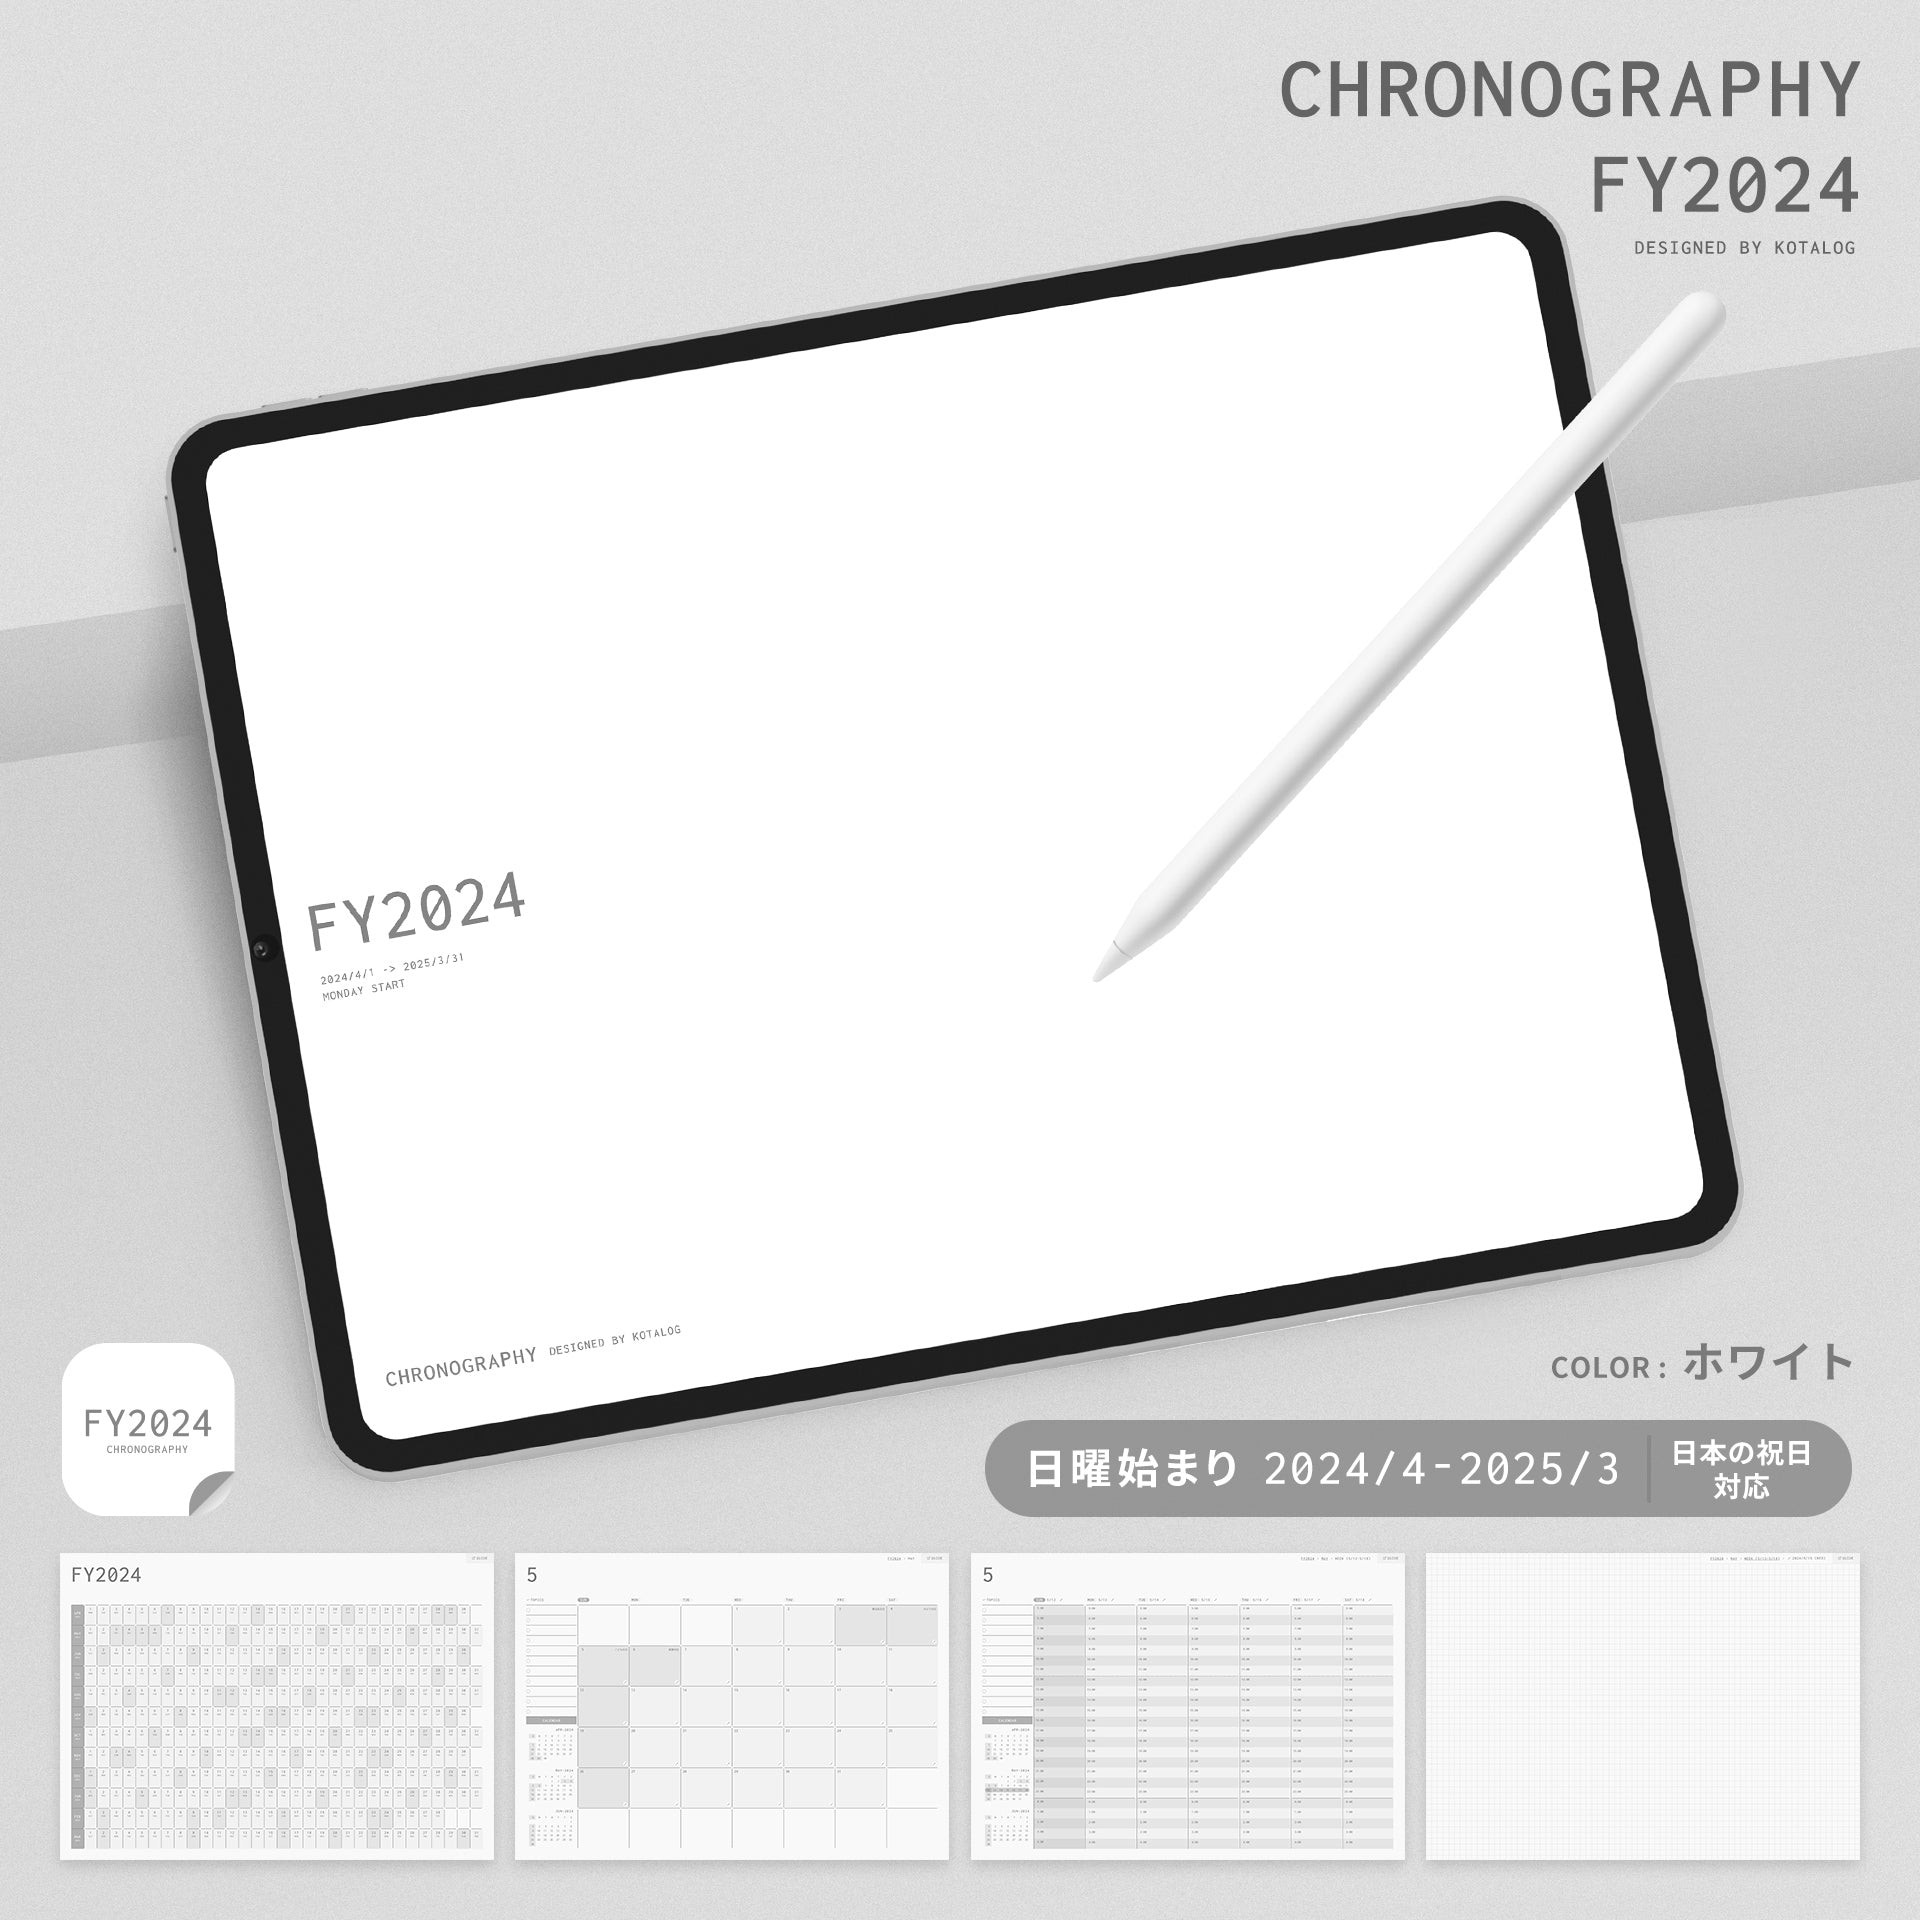 CHRONOGRAPHY FY2024